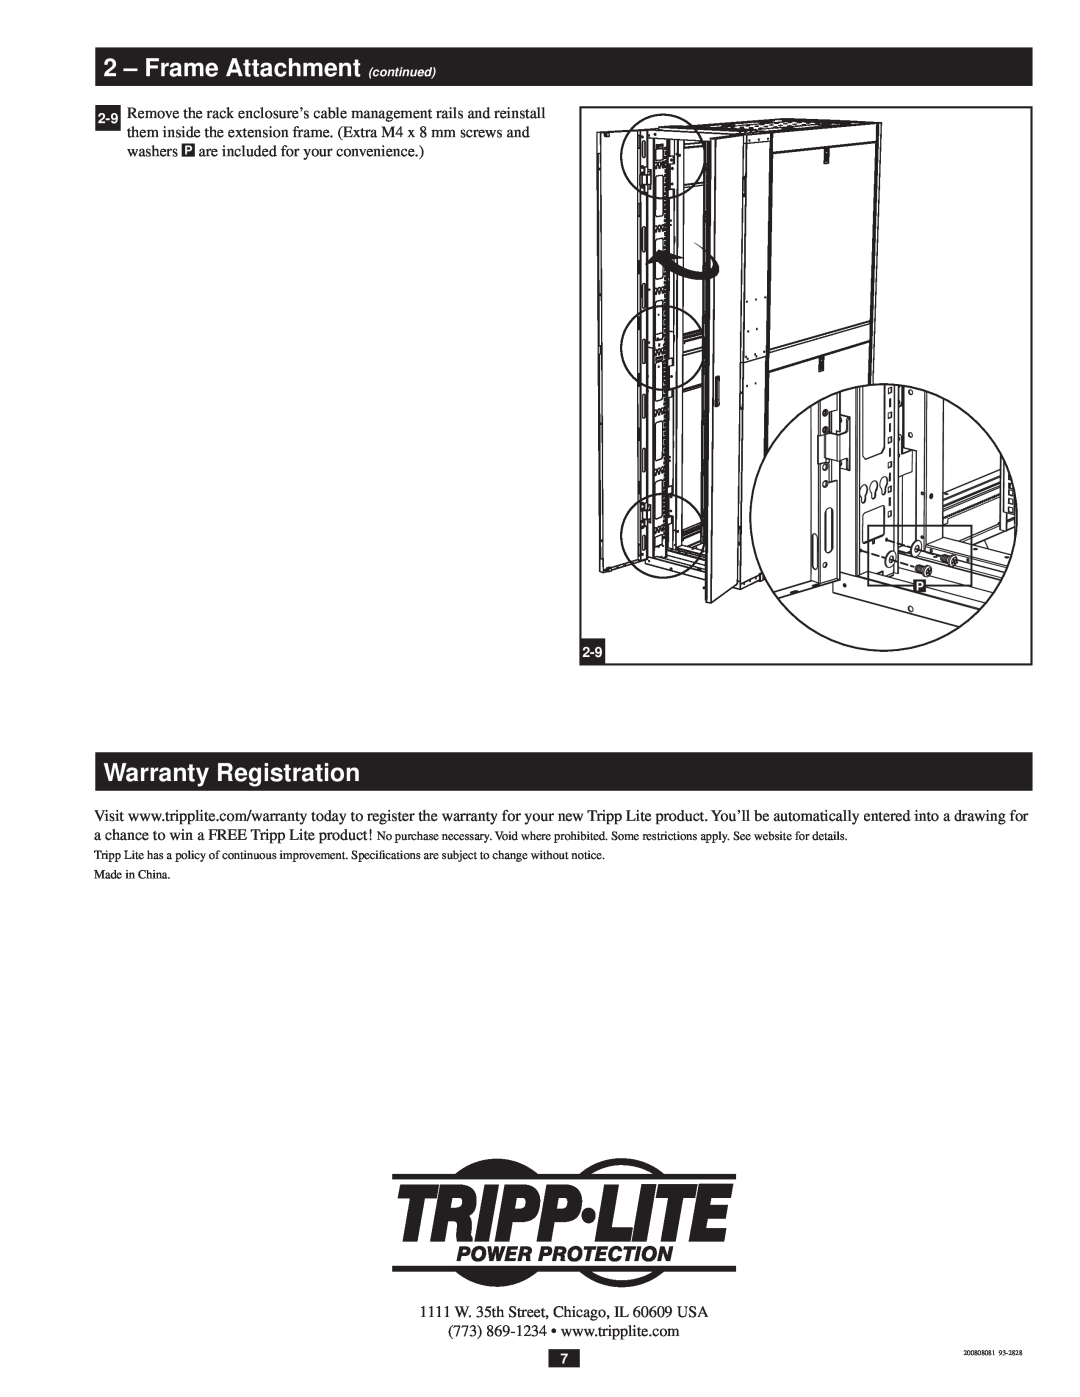 Tripp Lite SREXTENDER owner manual Warranty Registration, Frame Attachment continued 